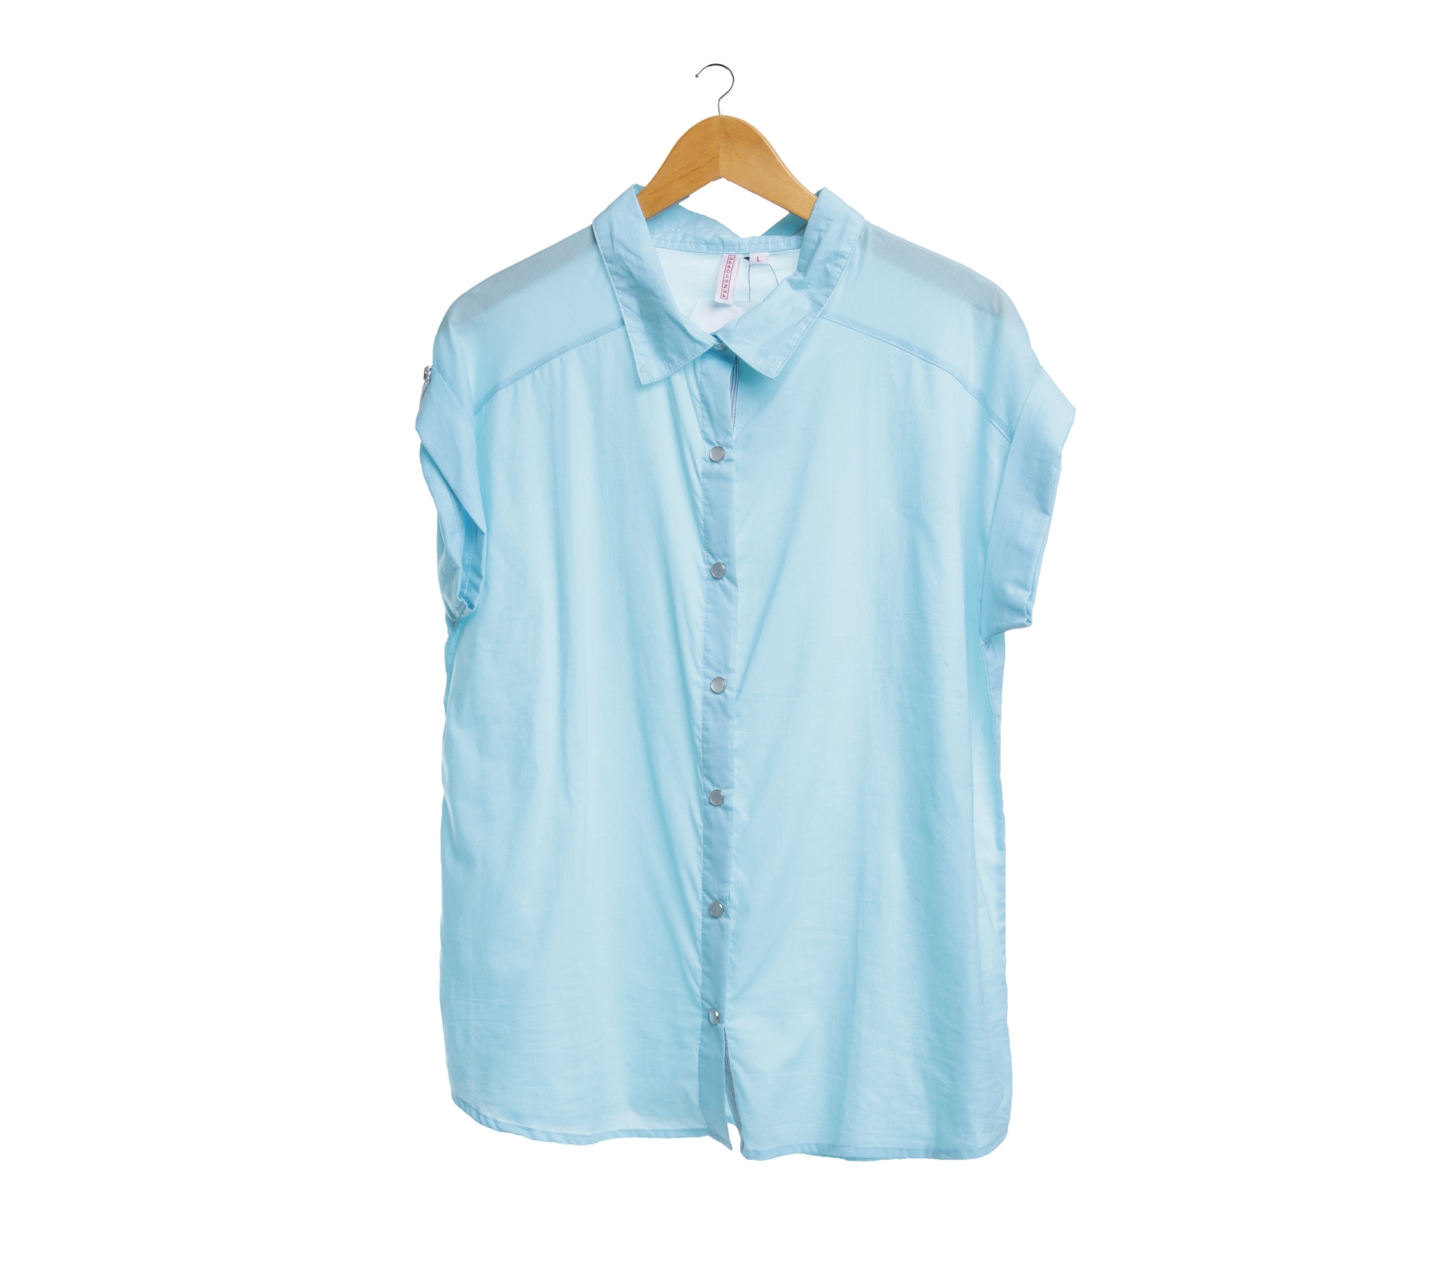 Penshoppe Blue Short Sleev Shirt